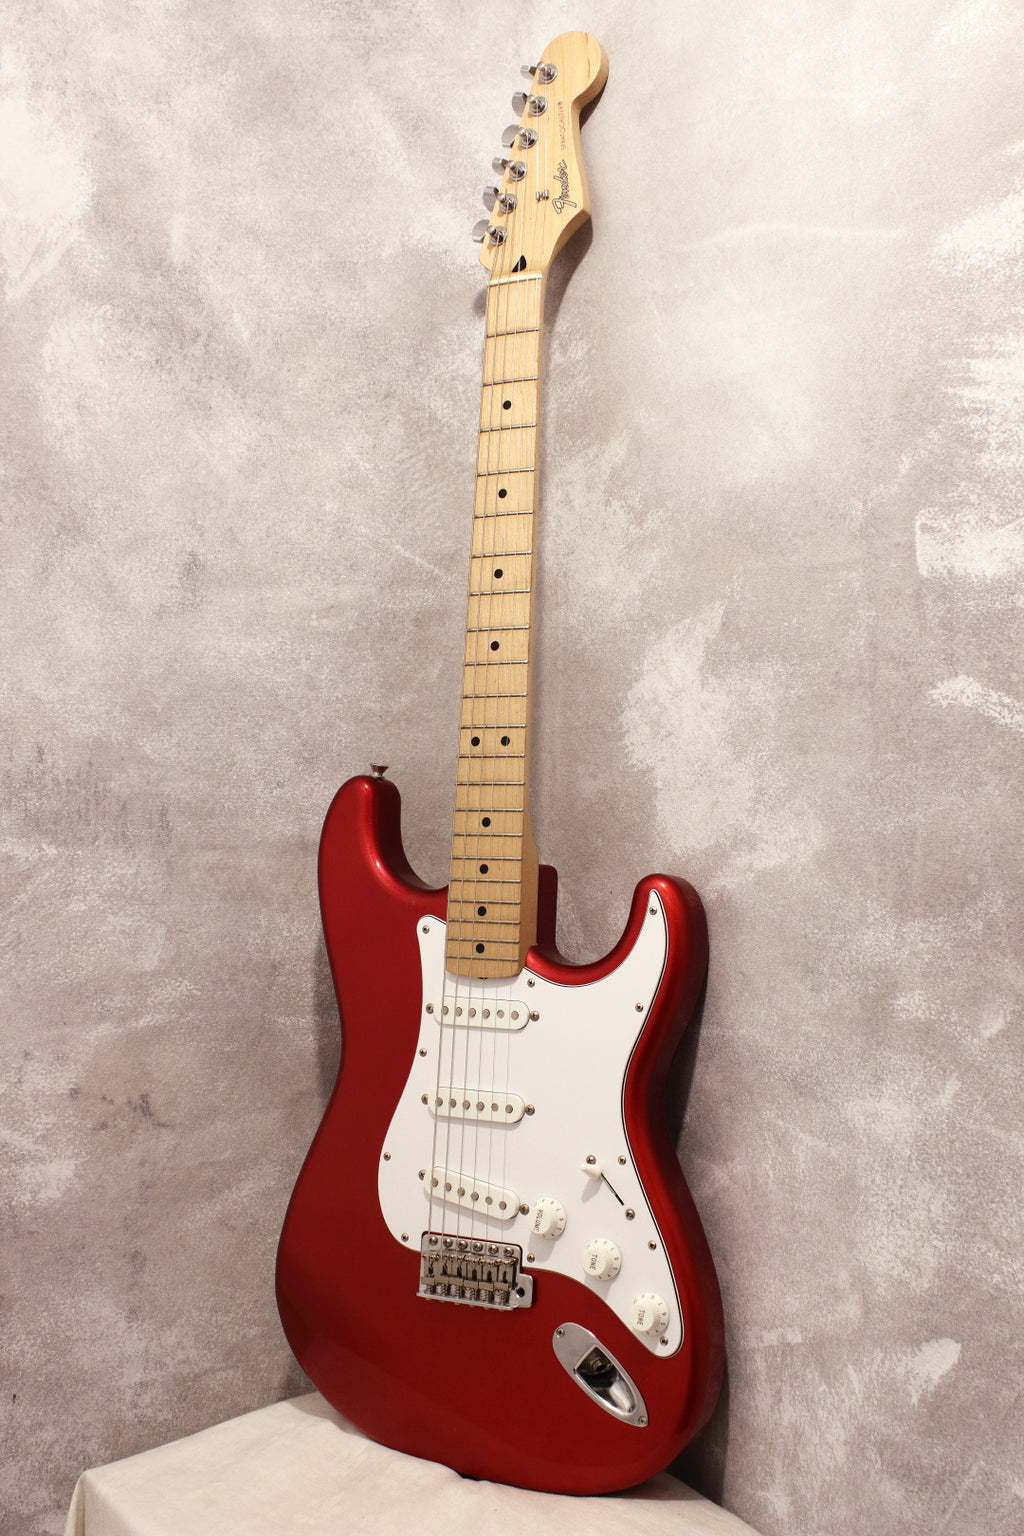 Fender Japan Standard Stratocaster ST43 Candy Apple Red 2008